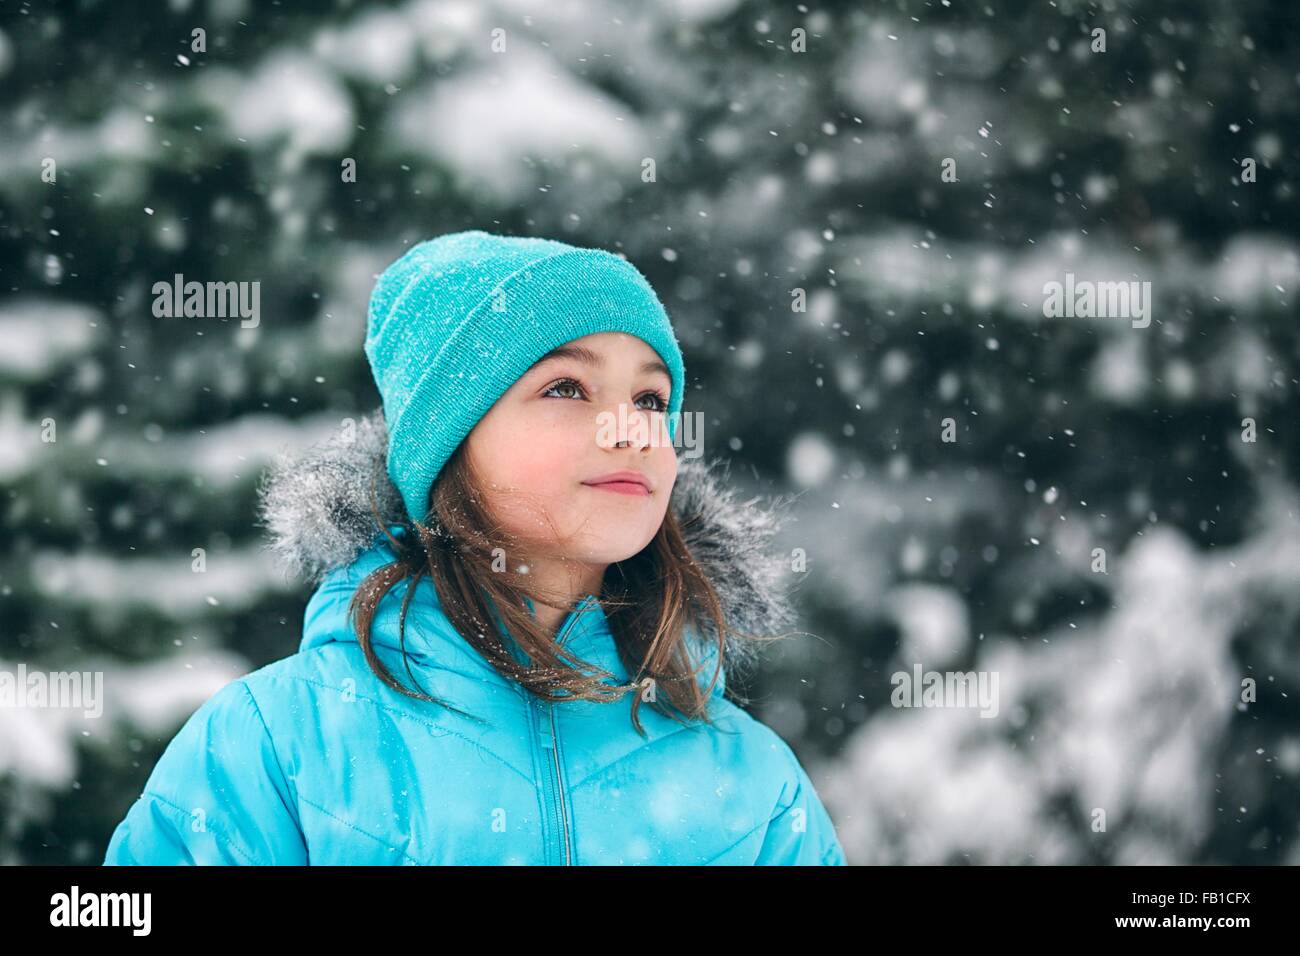 Girl wearing knit hat looking away, snowing Stock Photo